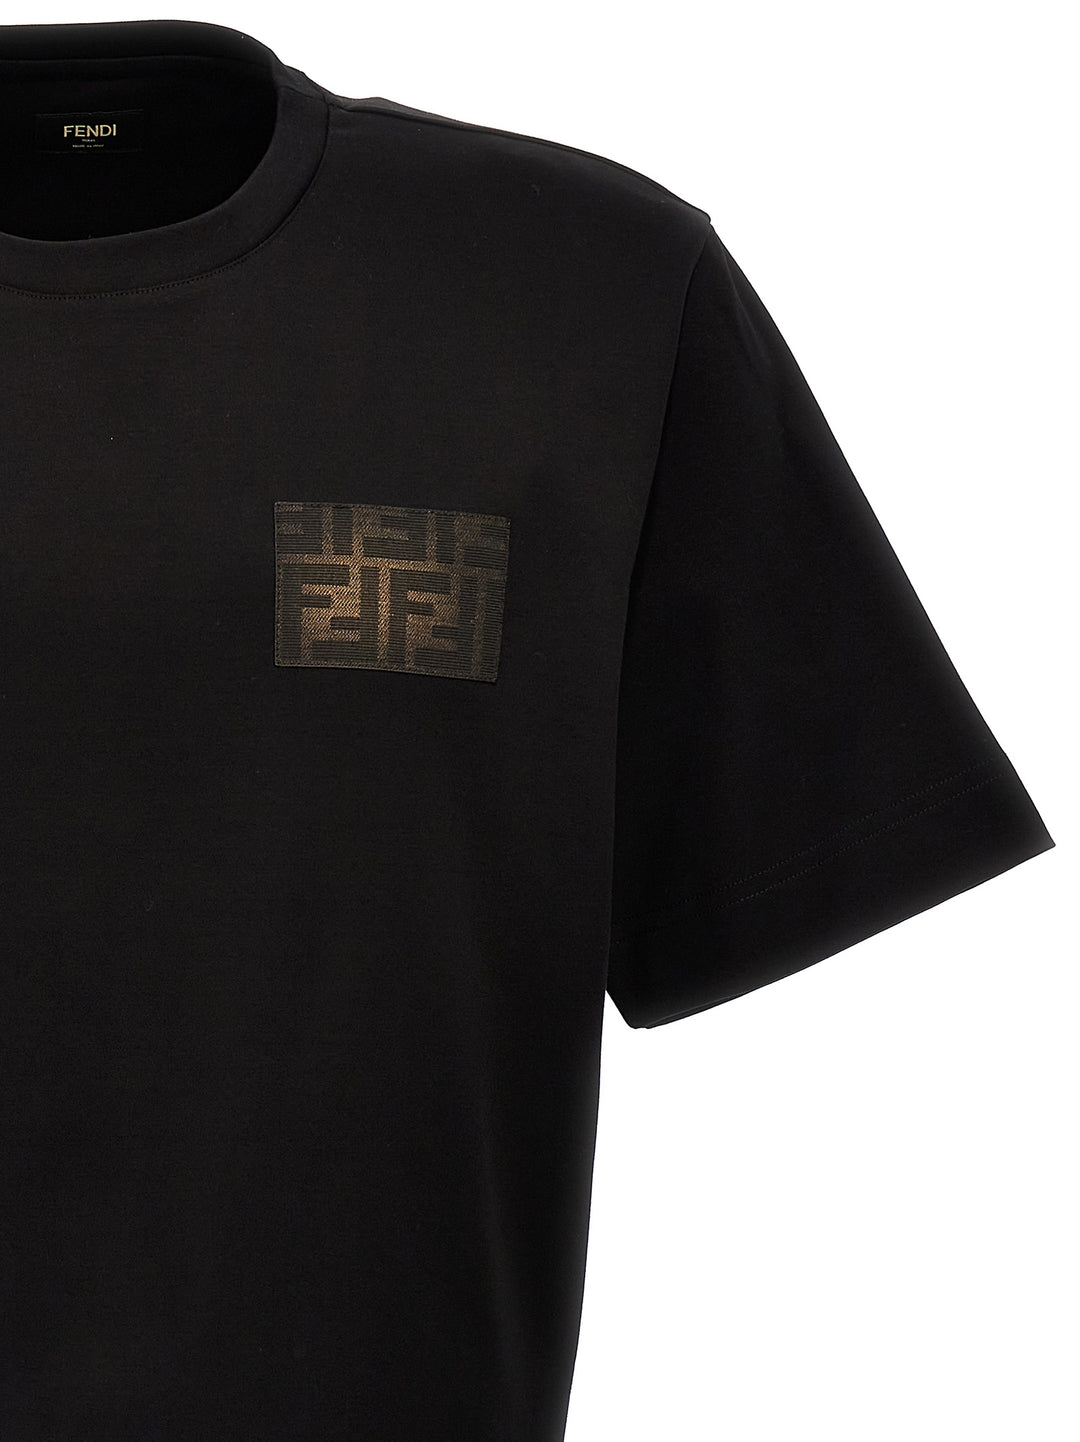 Ff Eclissi T Shirt Nero